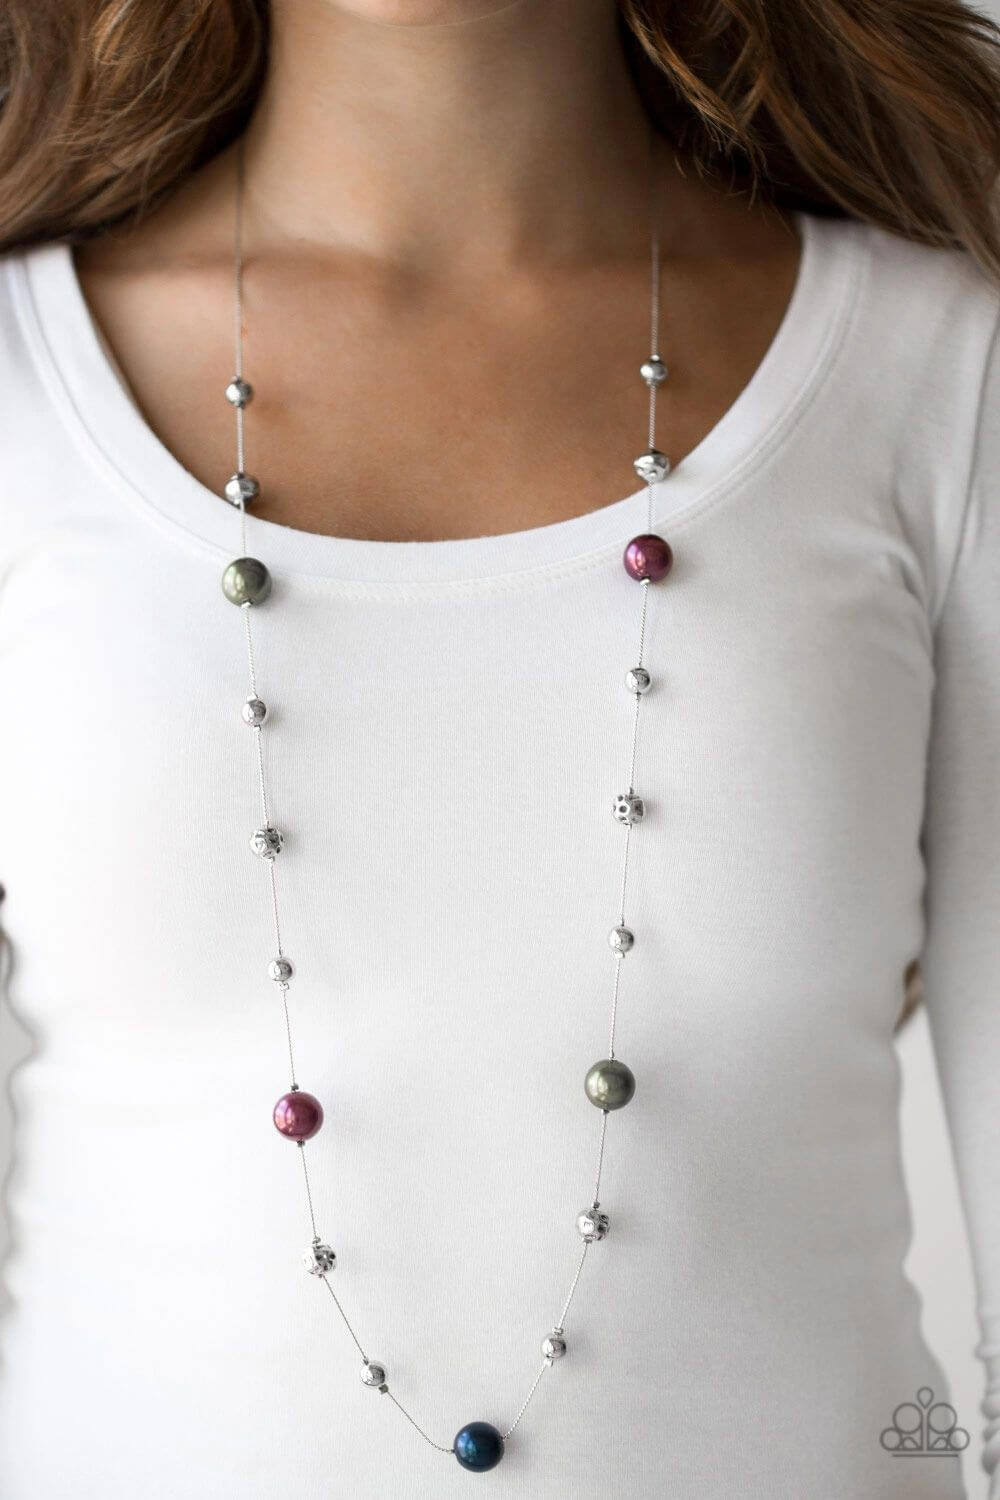 Eloquently Eloquent - Multi (Purple, Green & Blue) Necklace Set - Princess Glam Shop